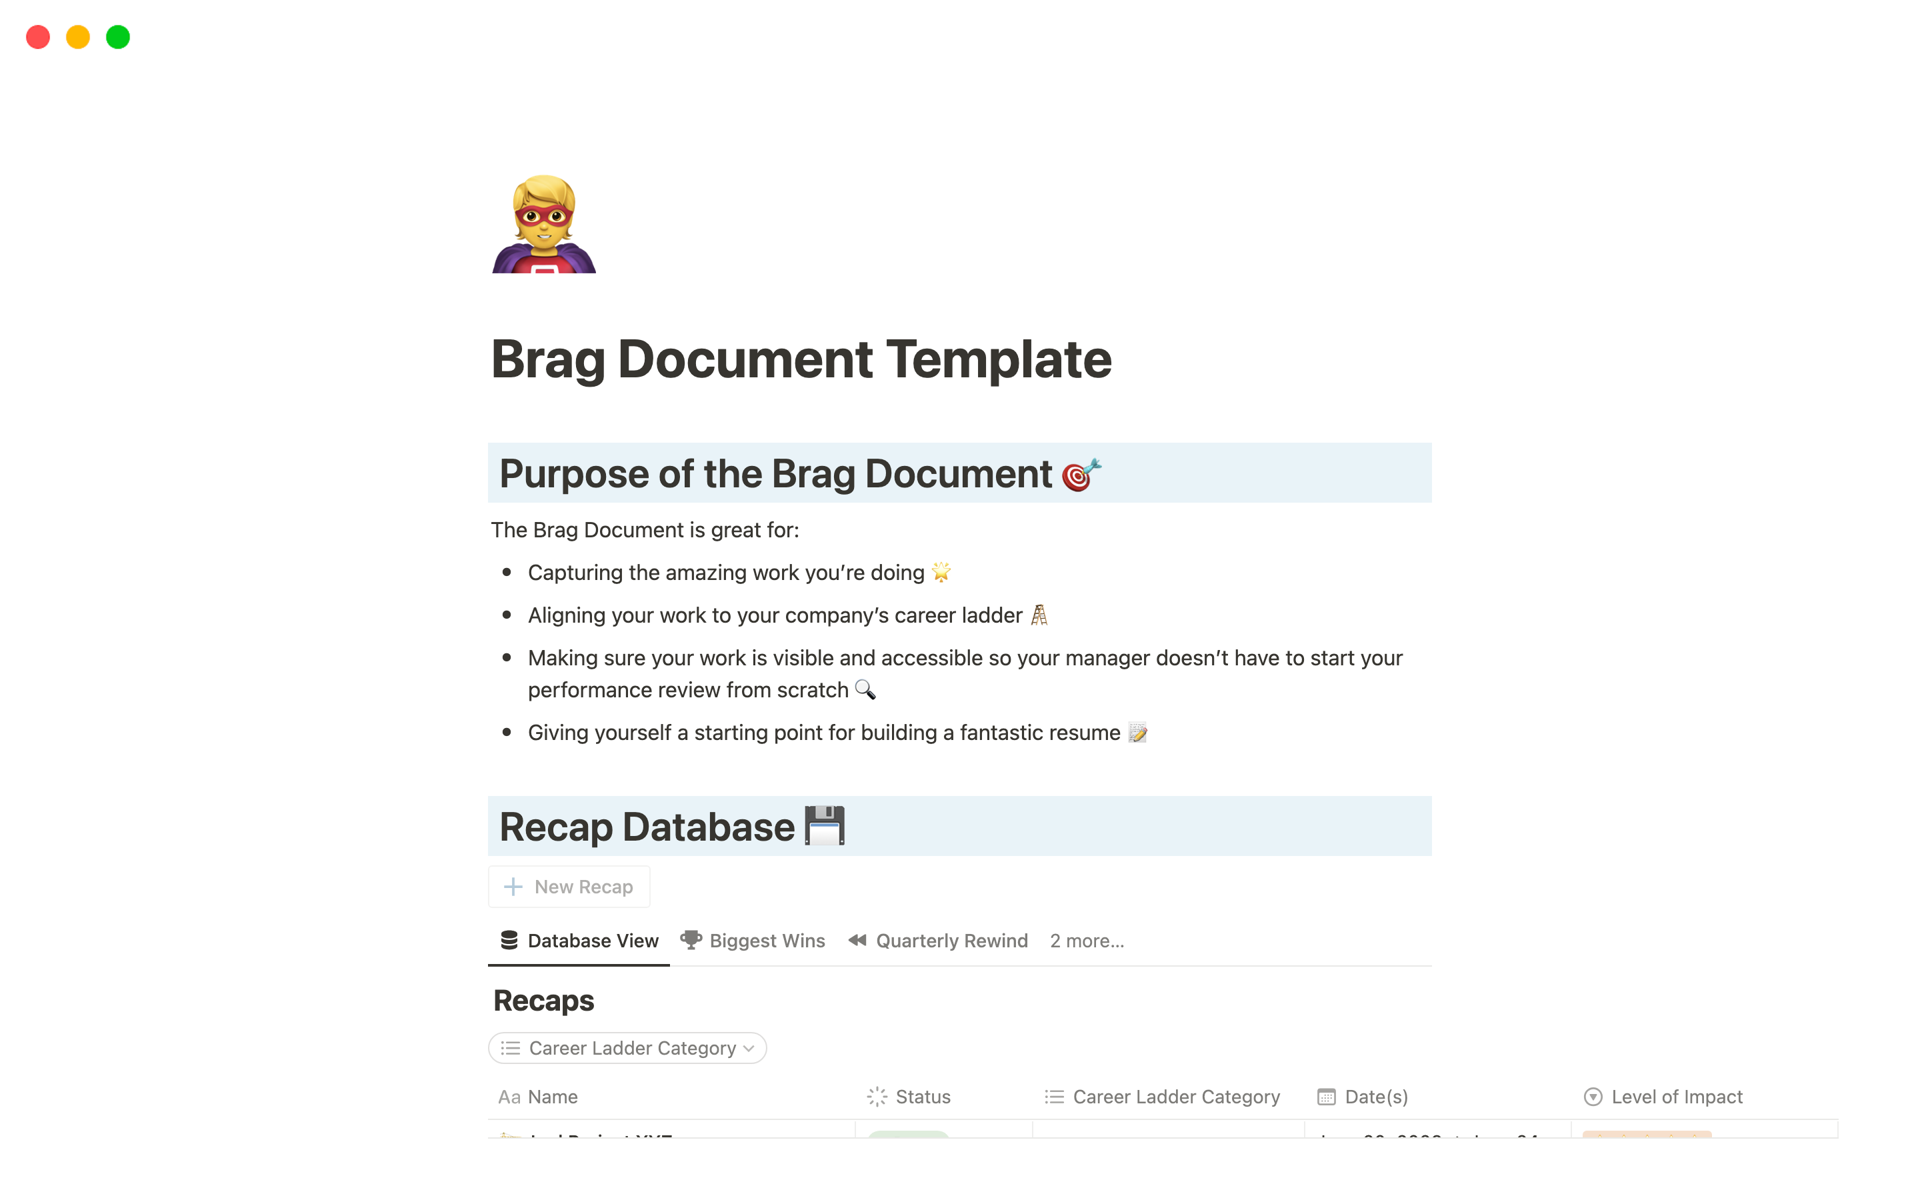 Vista previa de una plantilla para Brag Document Template